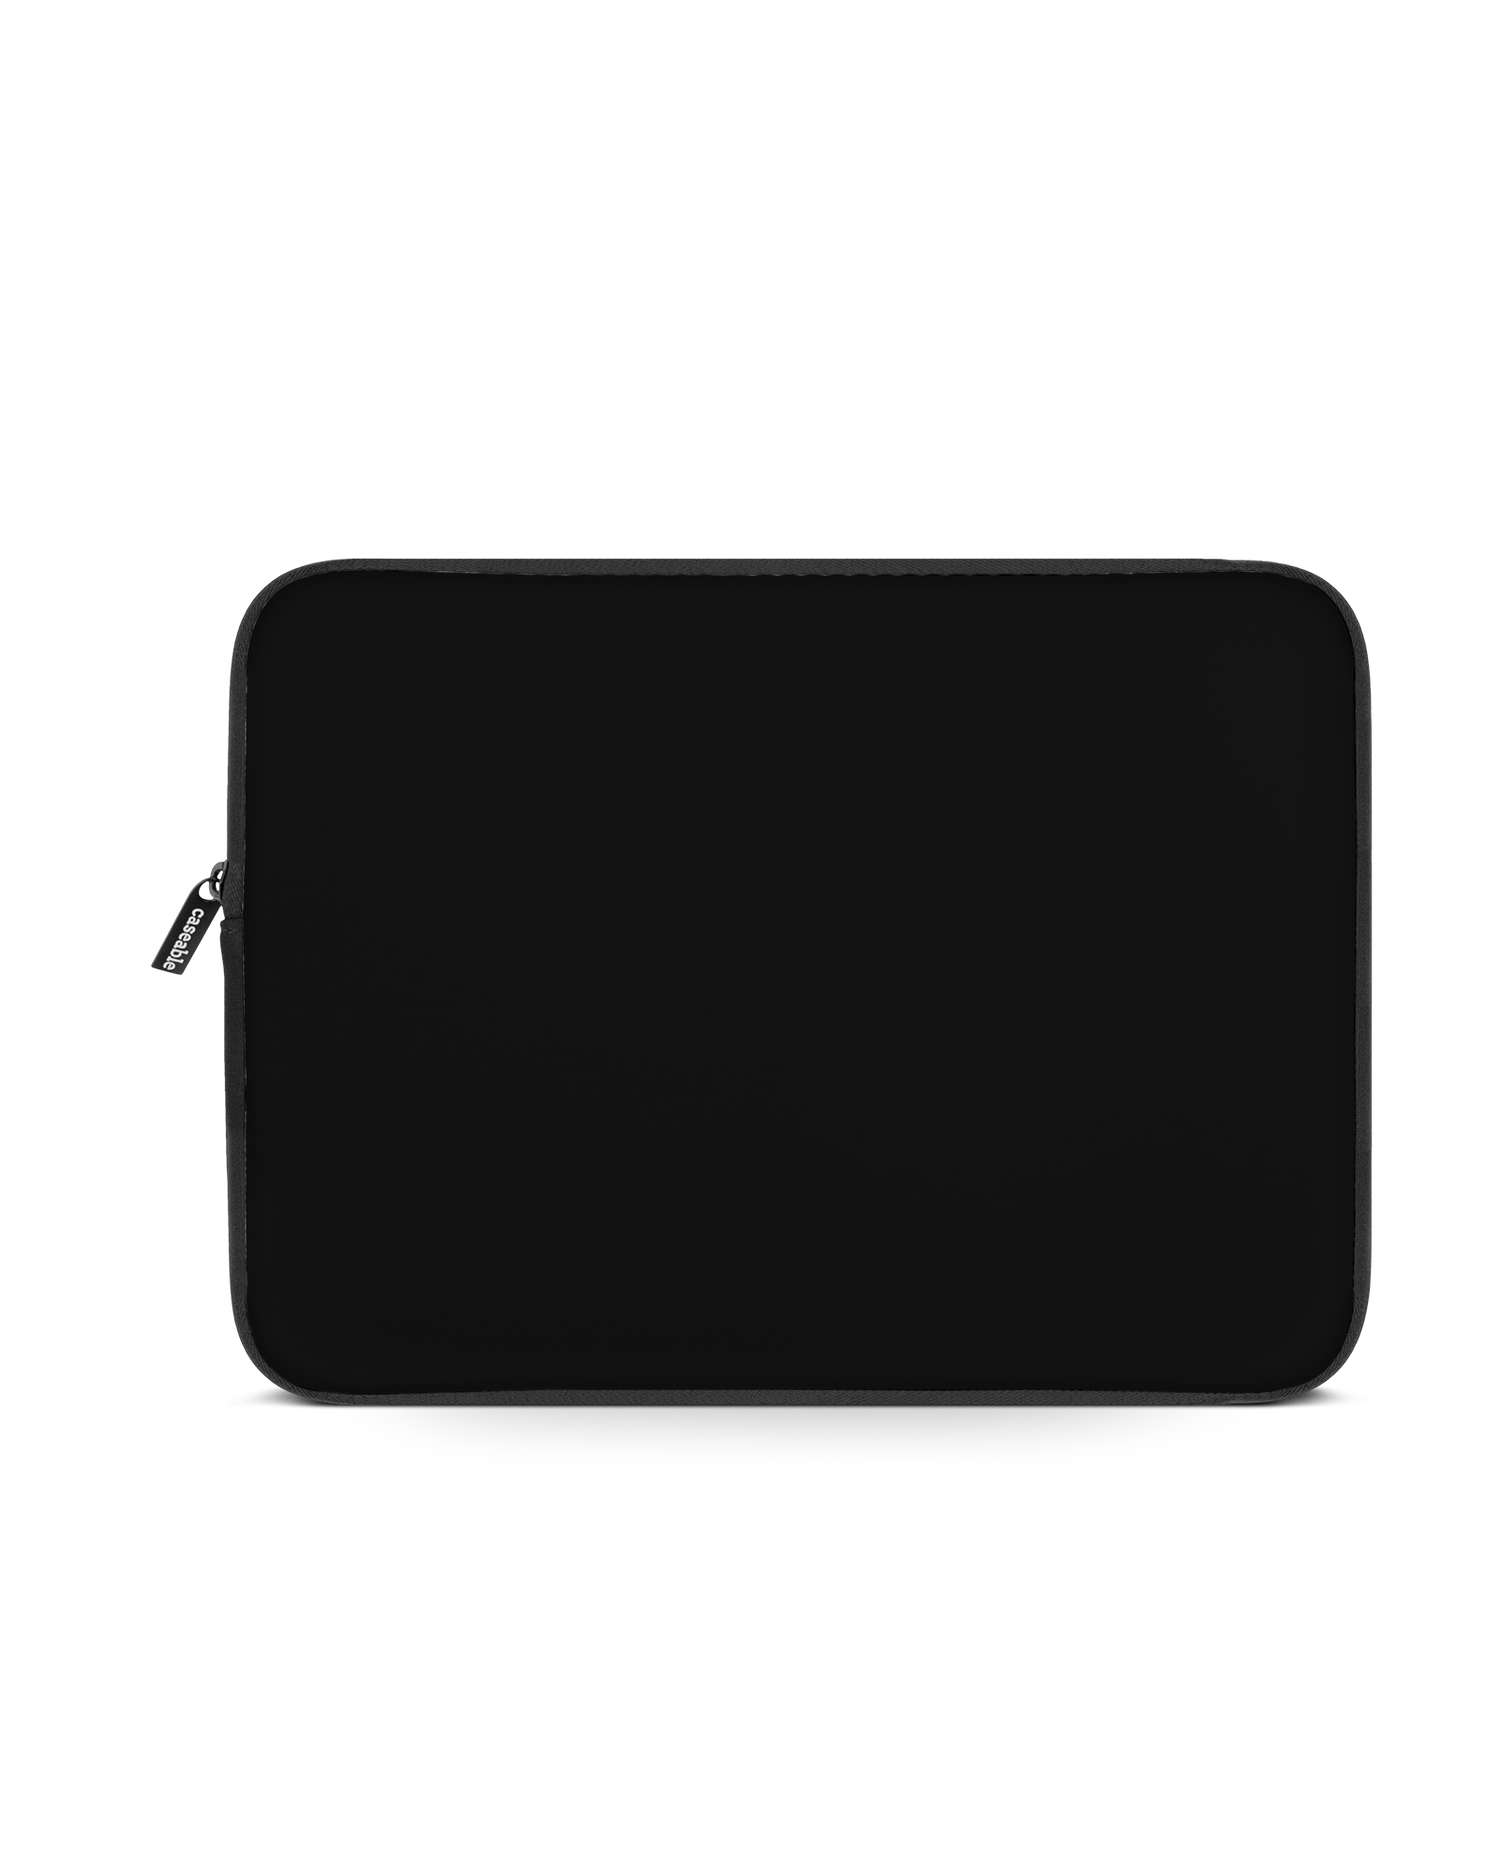 BLACK Laptop Case 13 inch: Front View